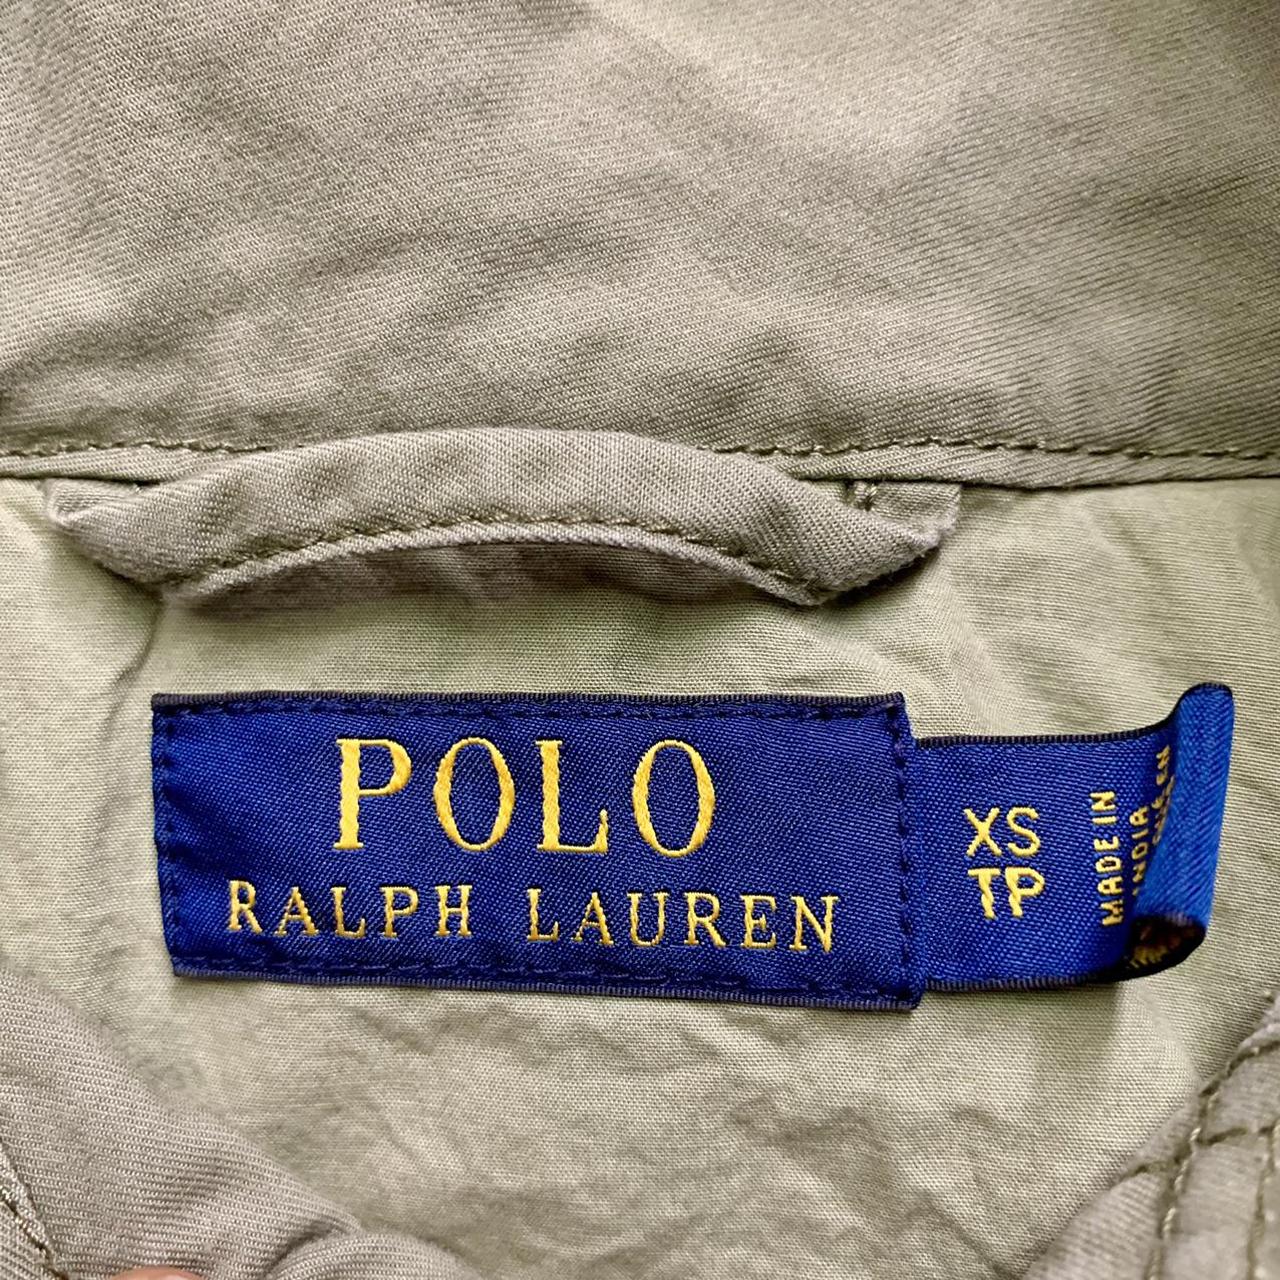 Polo Ralph Lauren army jacket - Depop